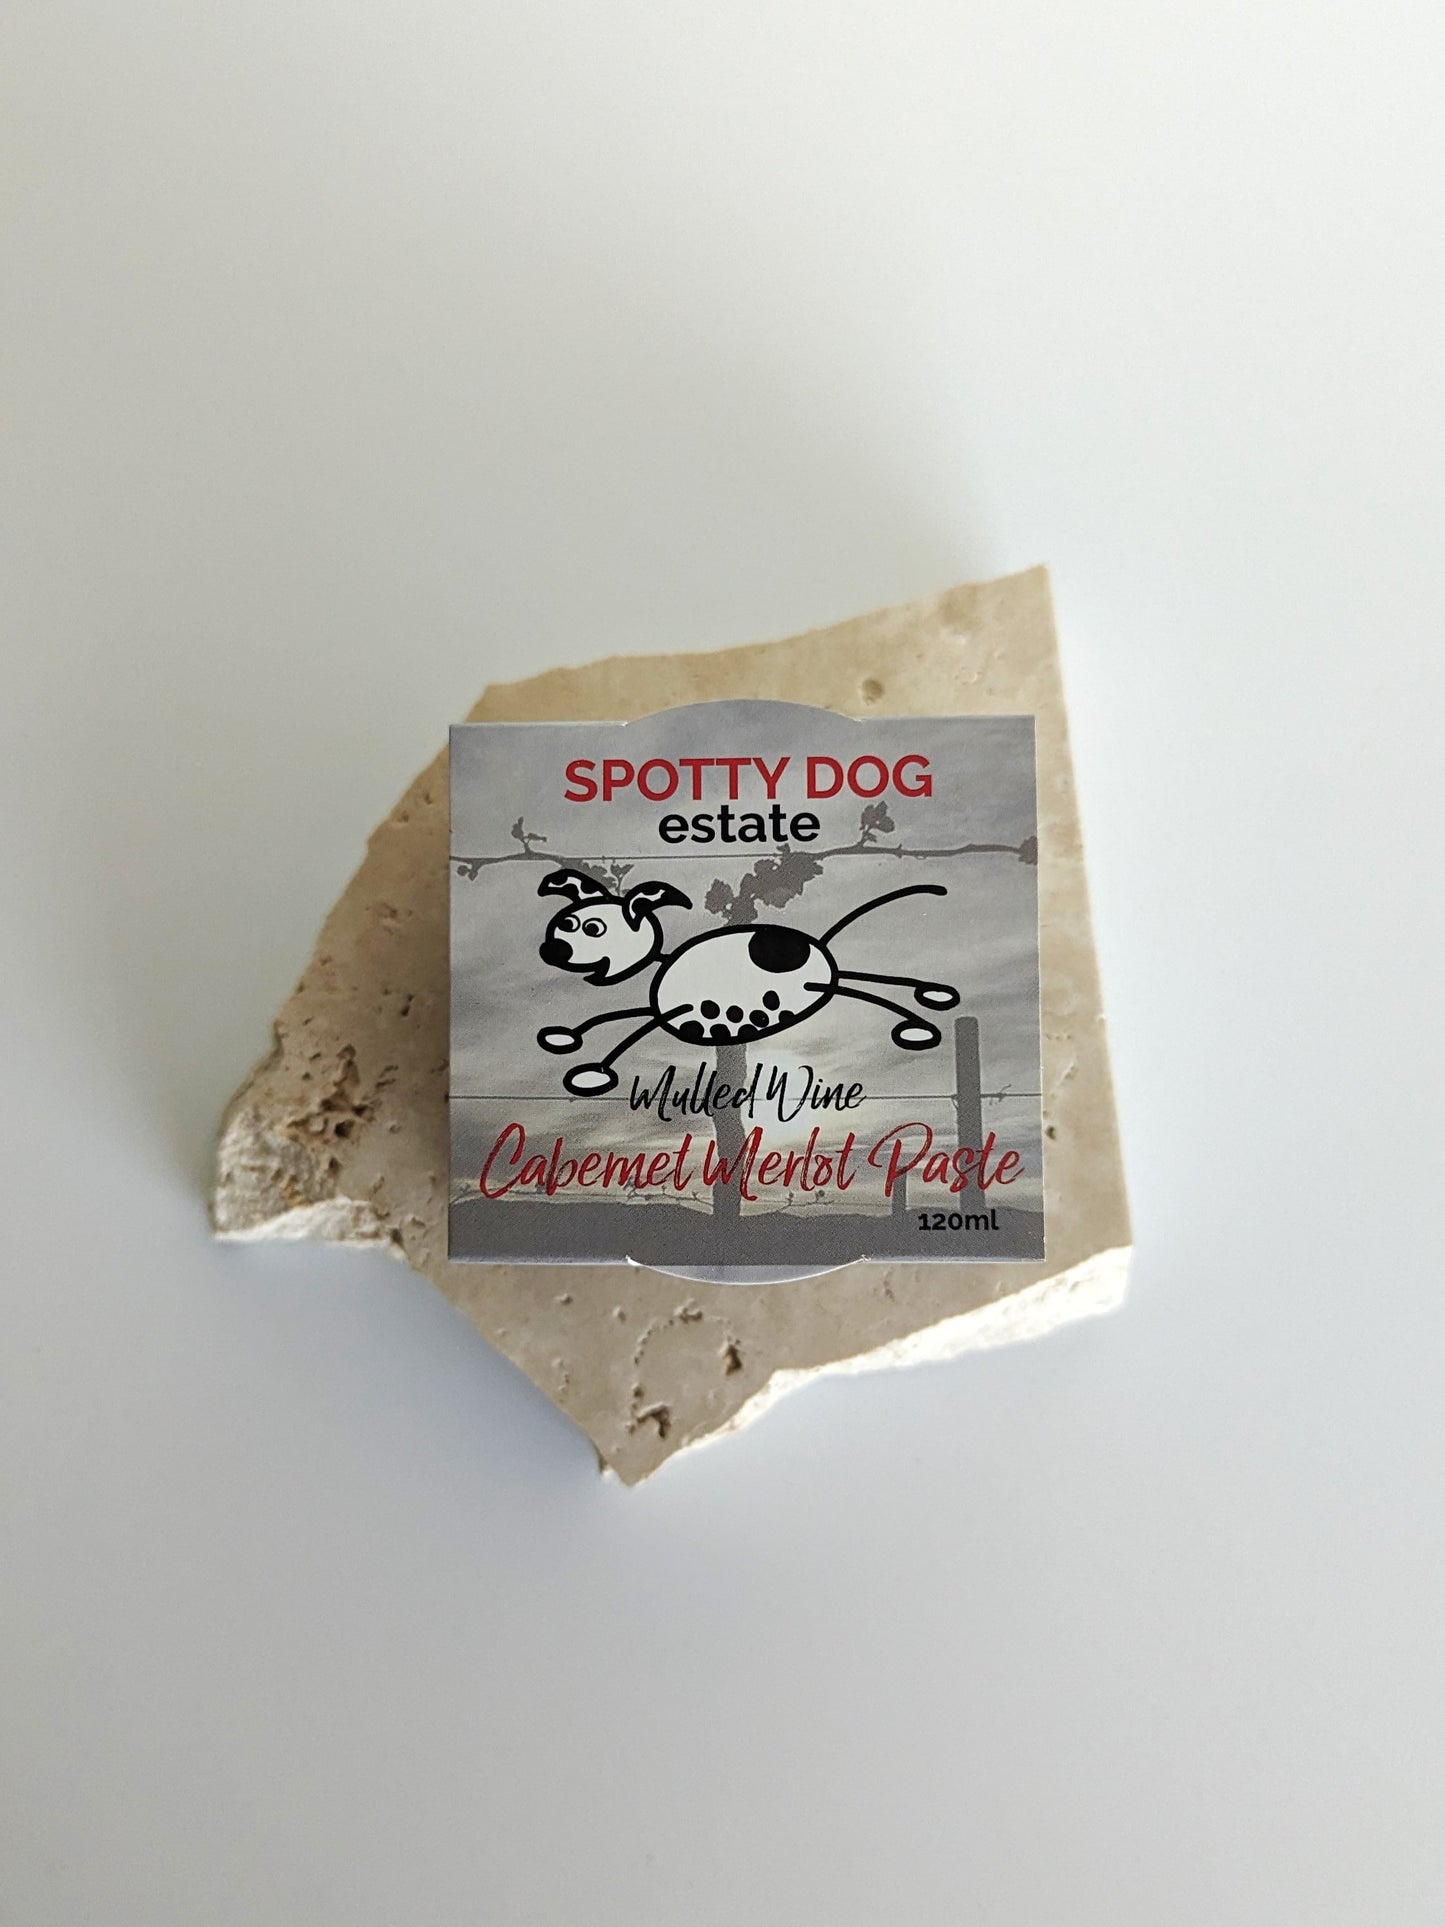 Spotty Dog Pastes